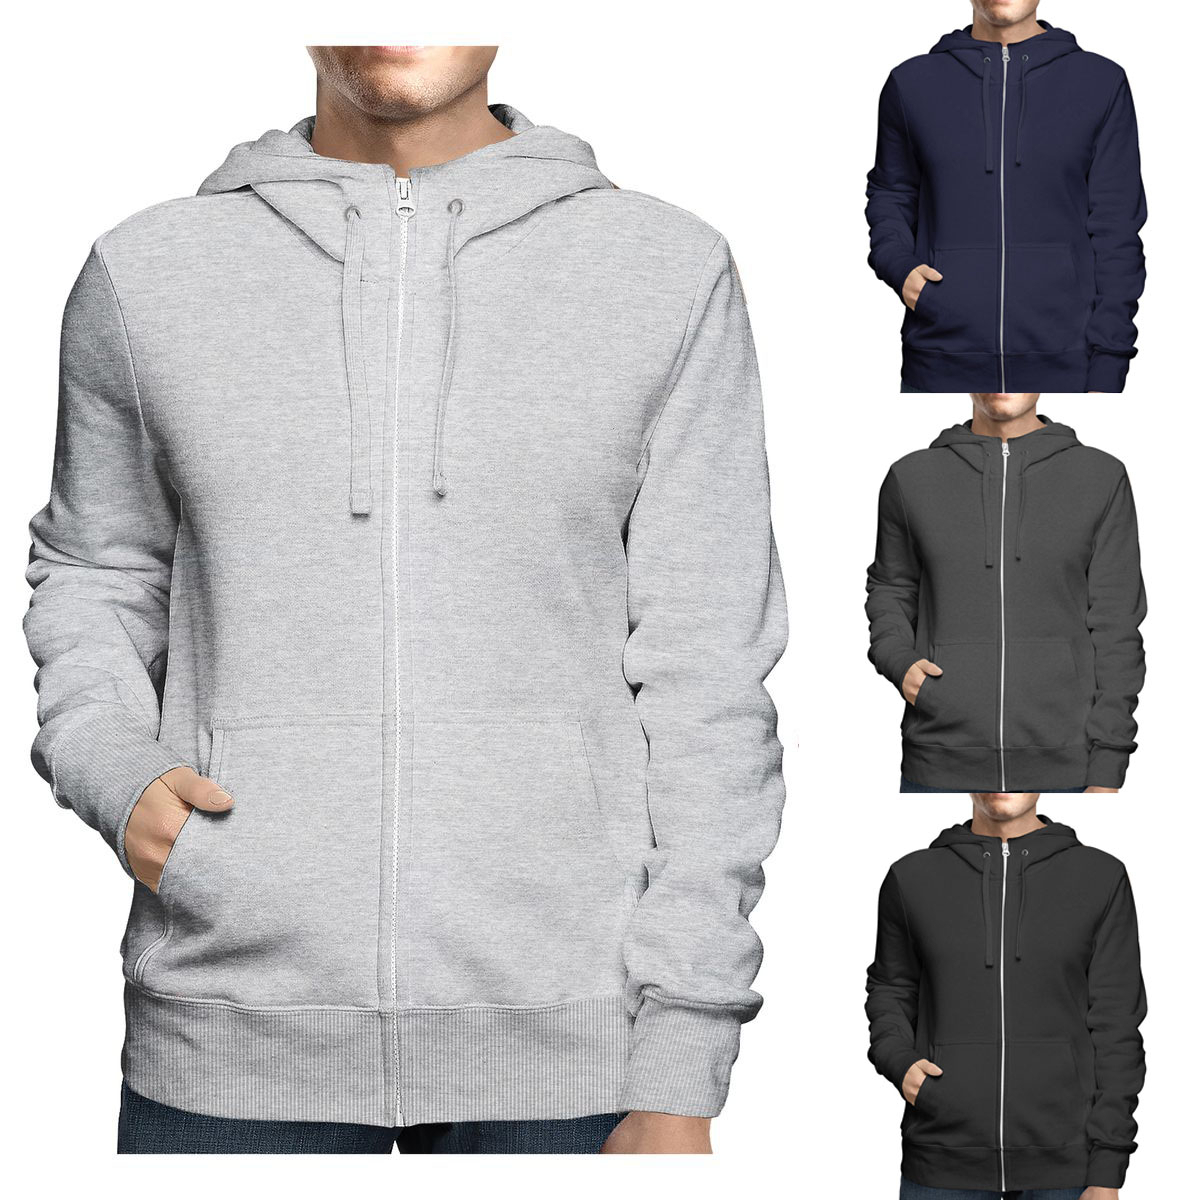 Multi-Pack: Men's Premium Soft Cozy Full Zip-Up Fleece Lined Hoodie Sweatshirt - 1-pack, X-large